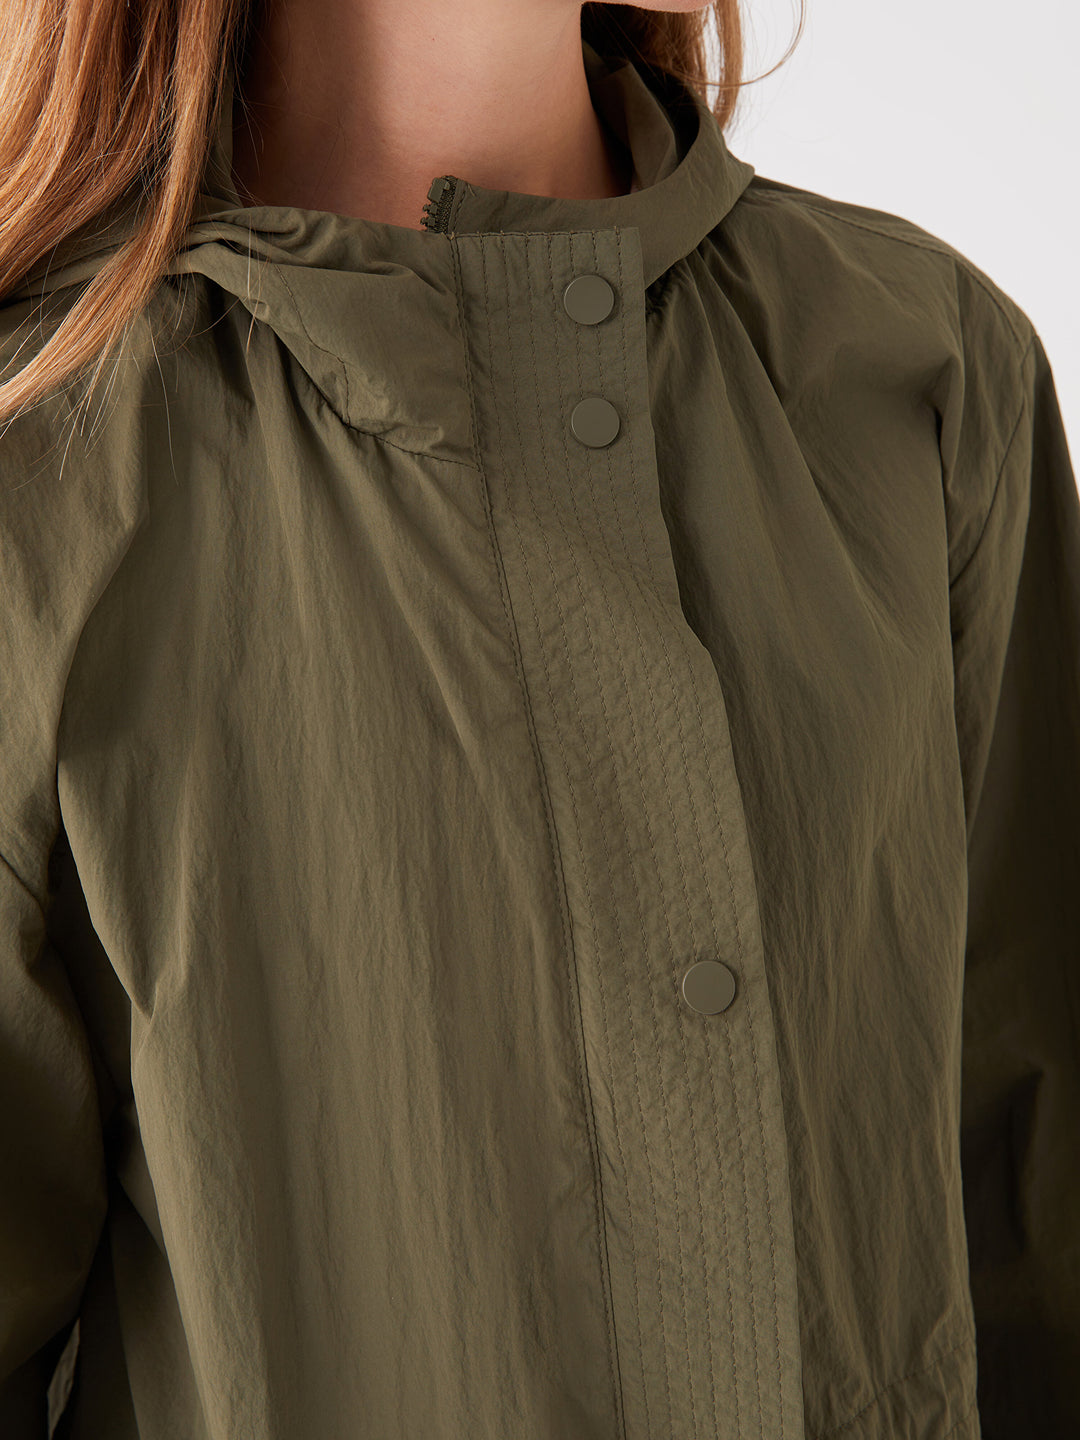 Women Hooded Plain Raincoat